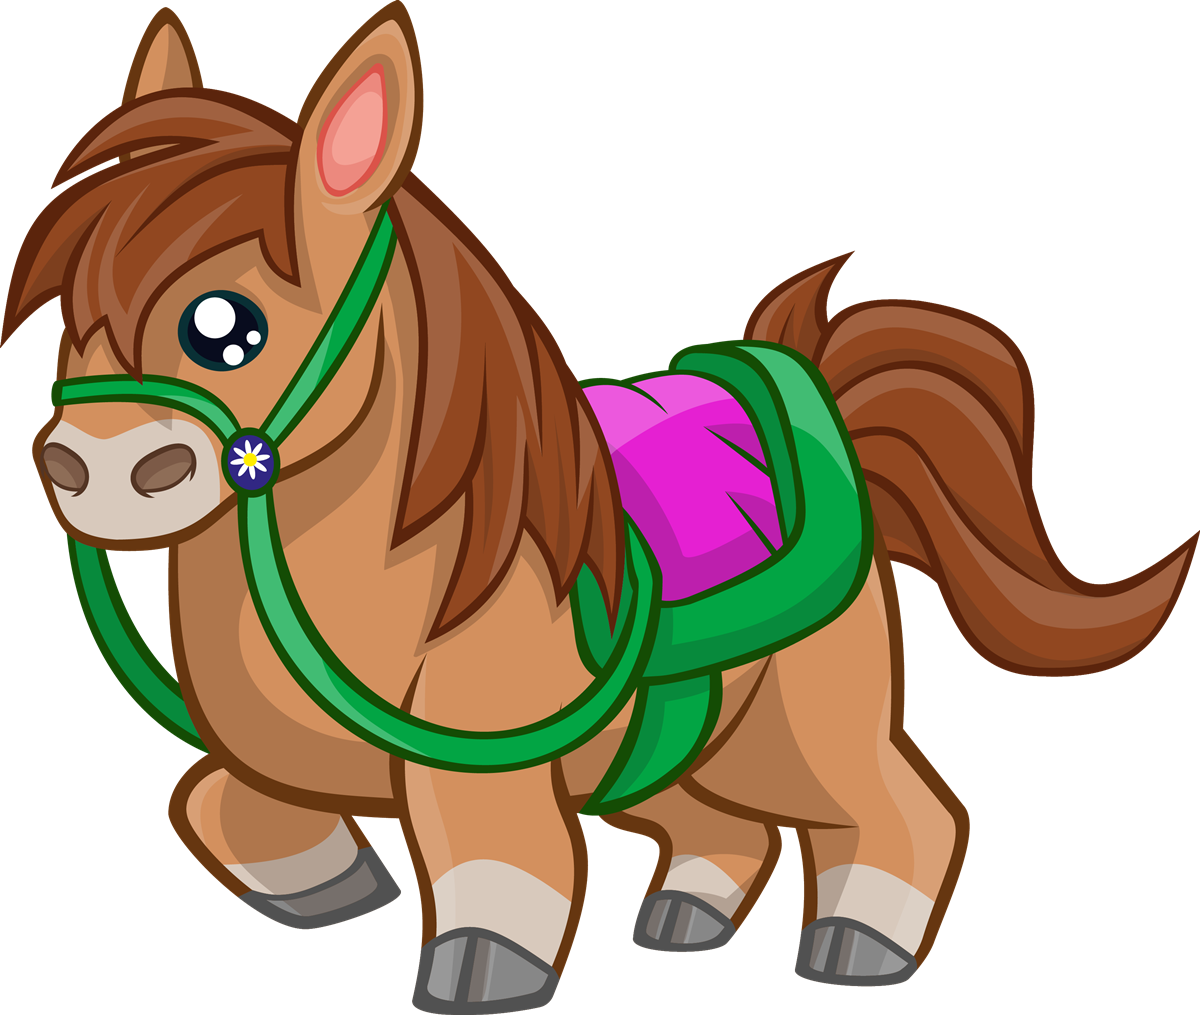 Free Cartoon Horse Cliparts, Download Free Cartoon Horse Cliparts png